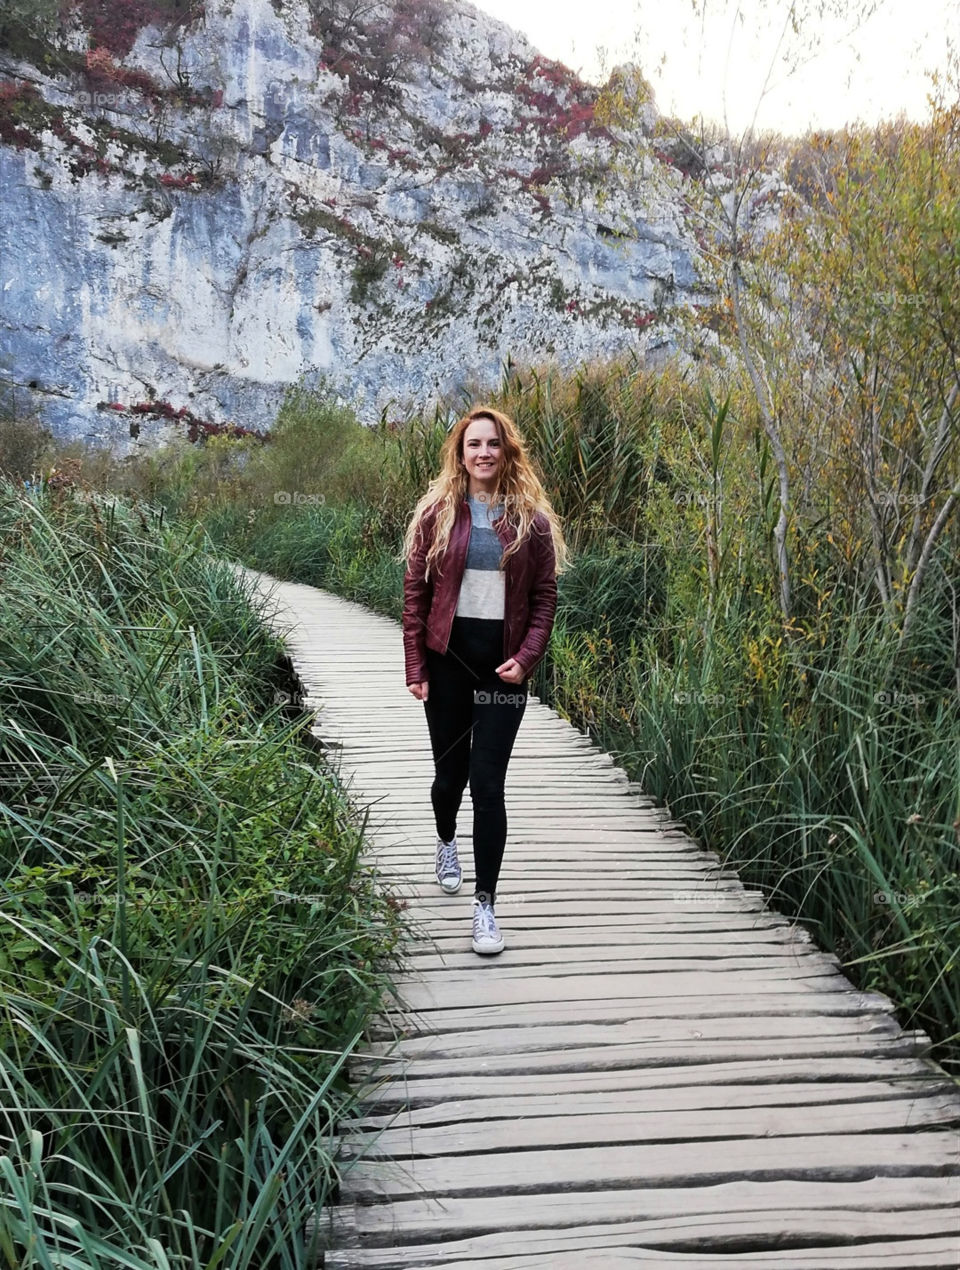 Me walking in Plitvice national park